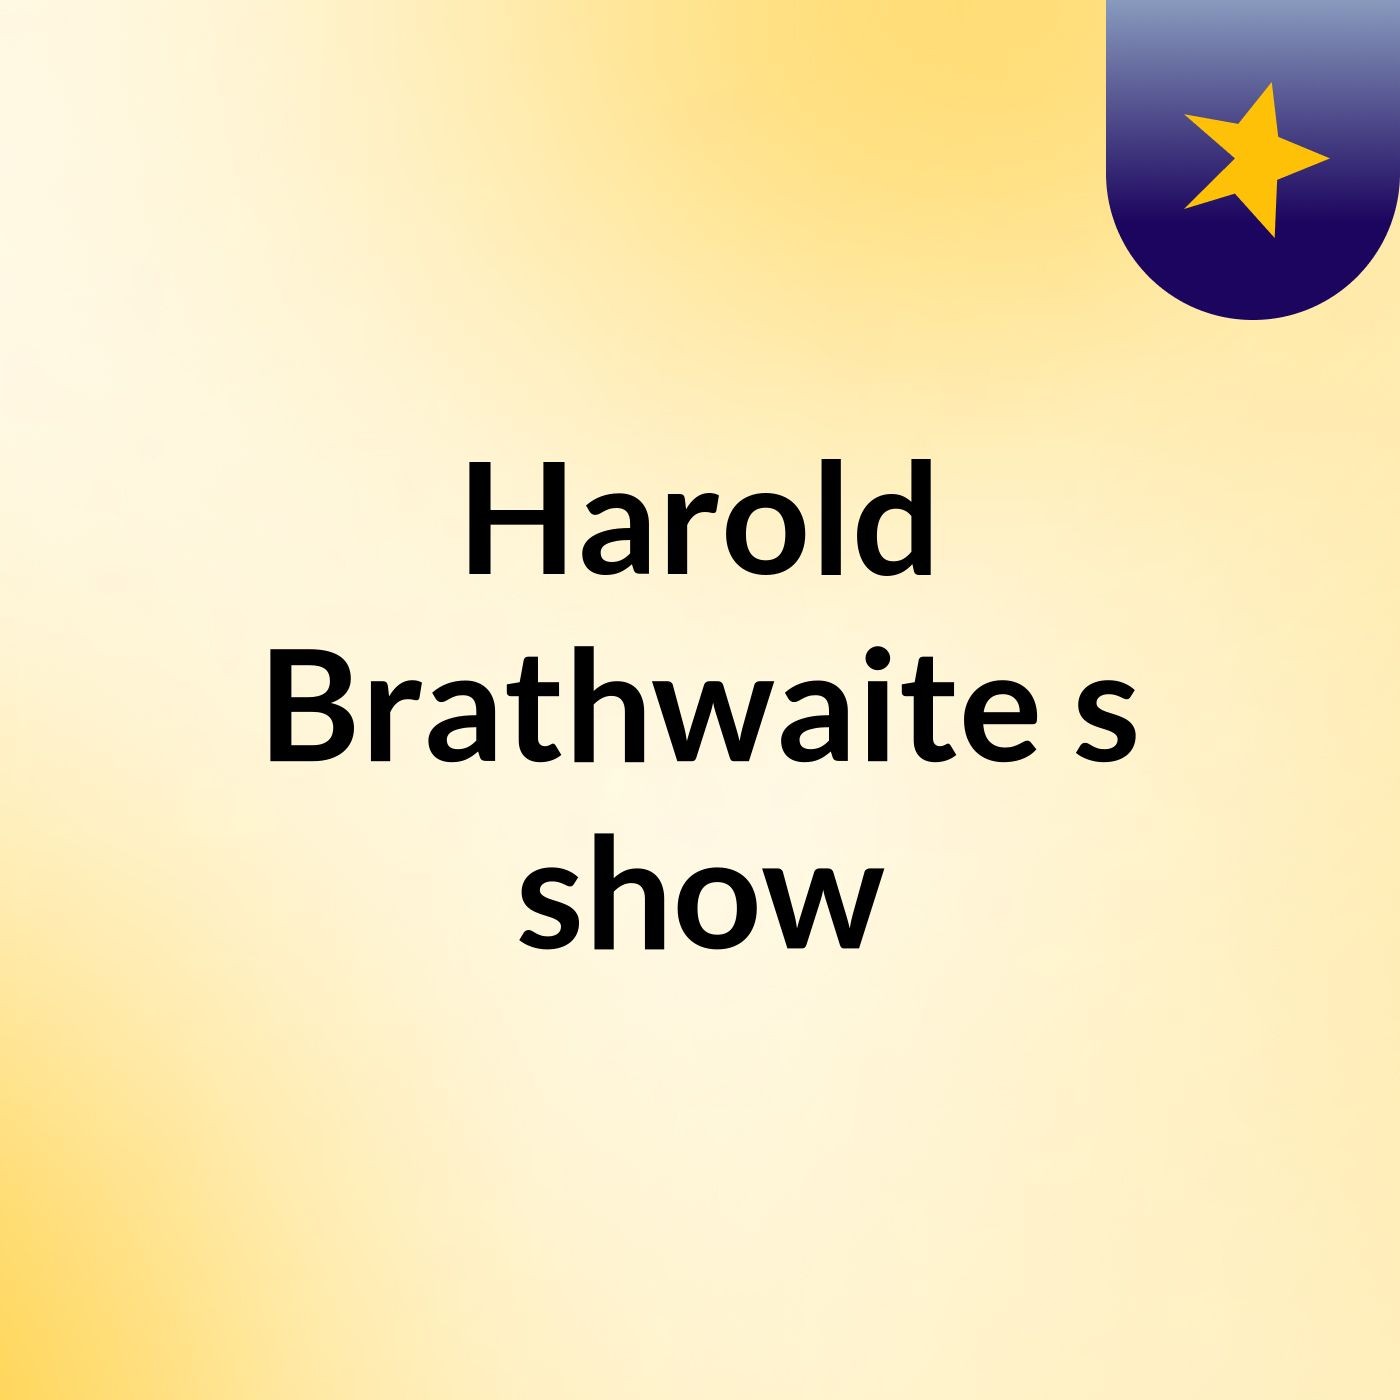 Harold Brathwaite's show